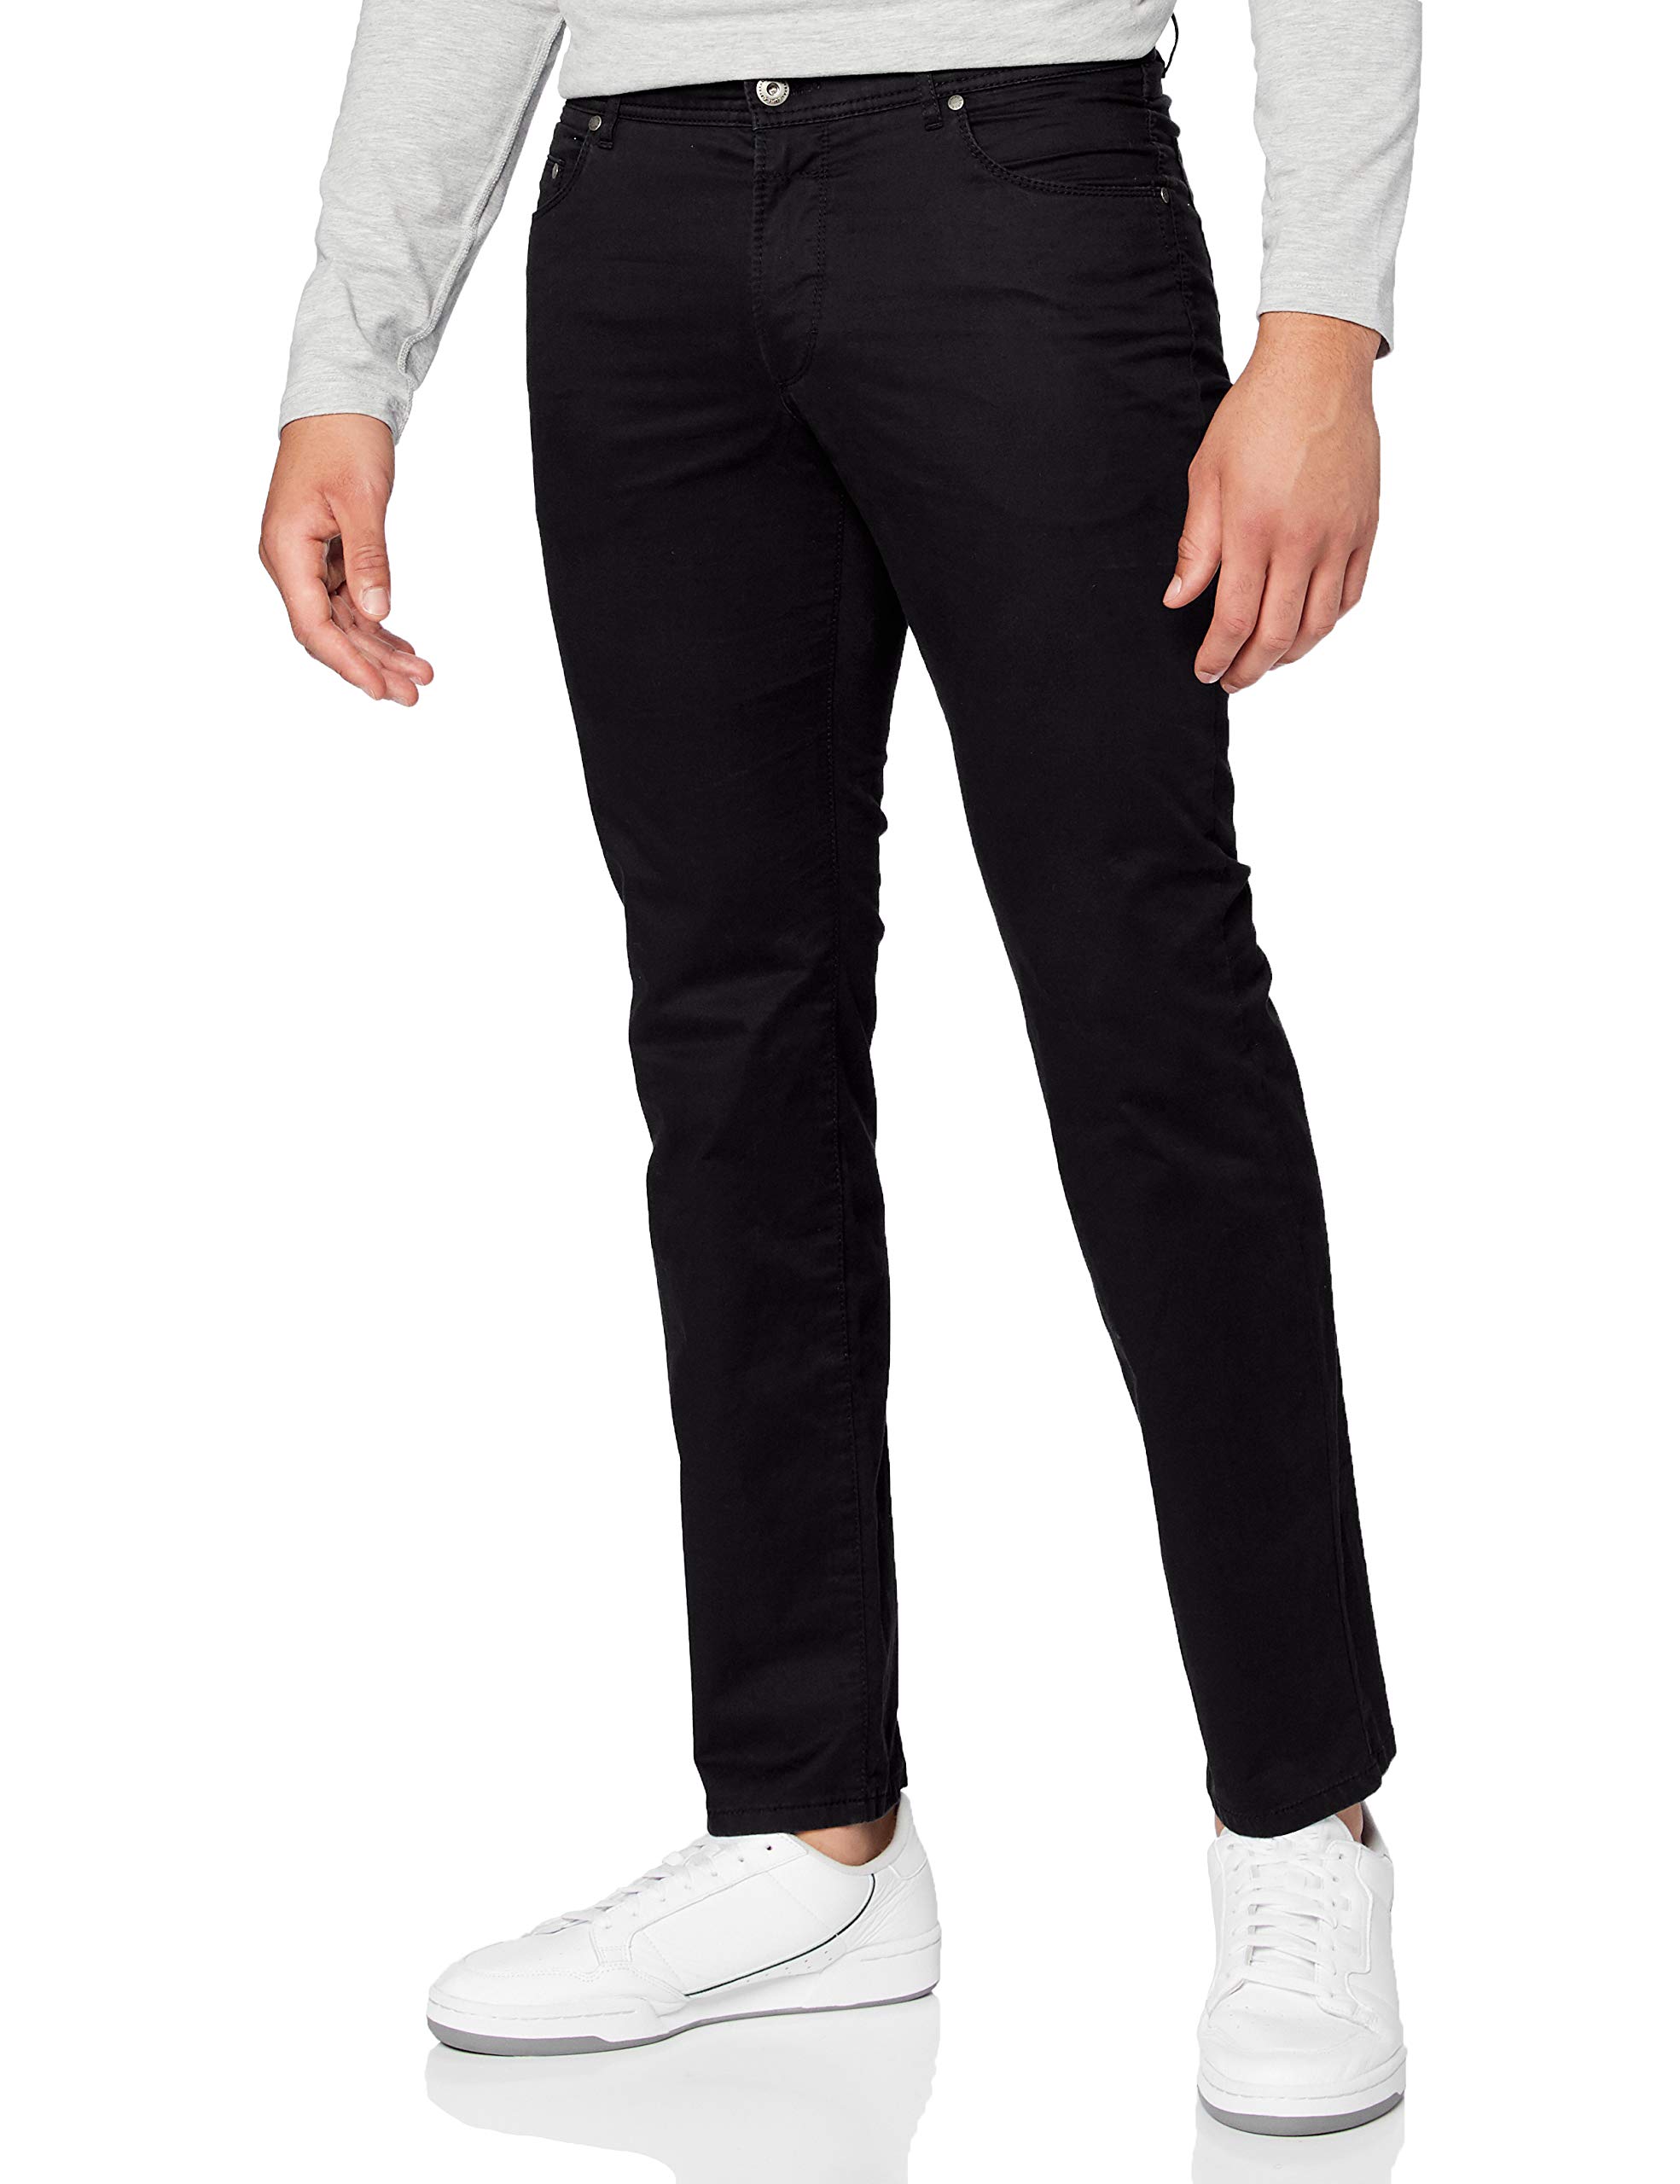 EUREX by BRAX Herren Regular Fit Jeans Hose Style PEP-s Five Pocket Baumwolle, Schwarz, PERMA BLACK, 28U